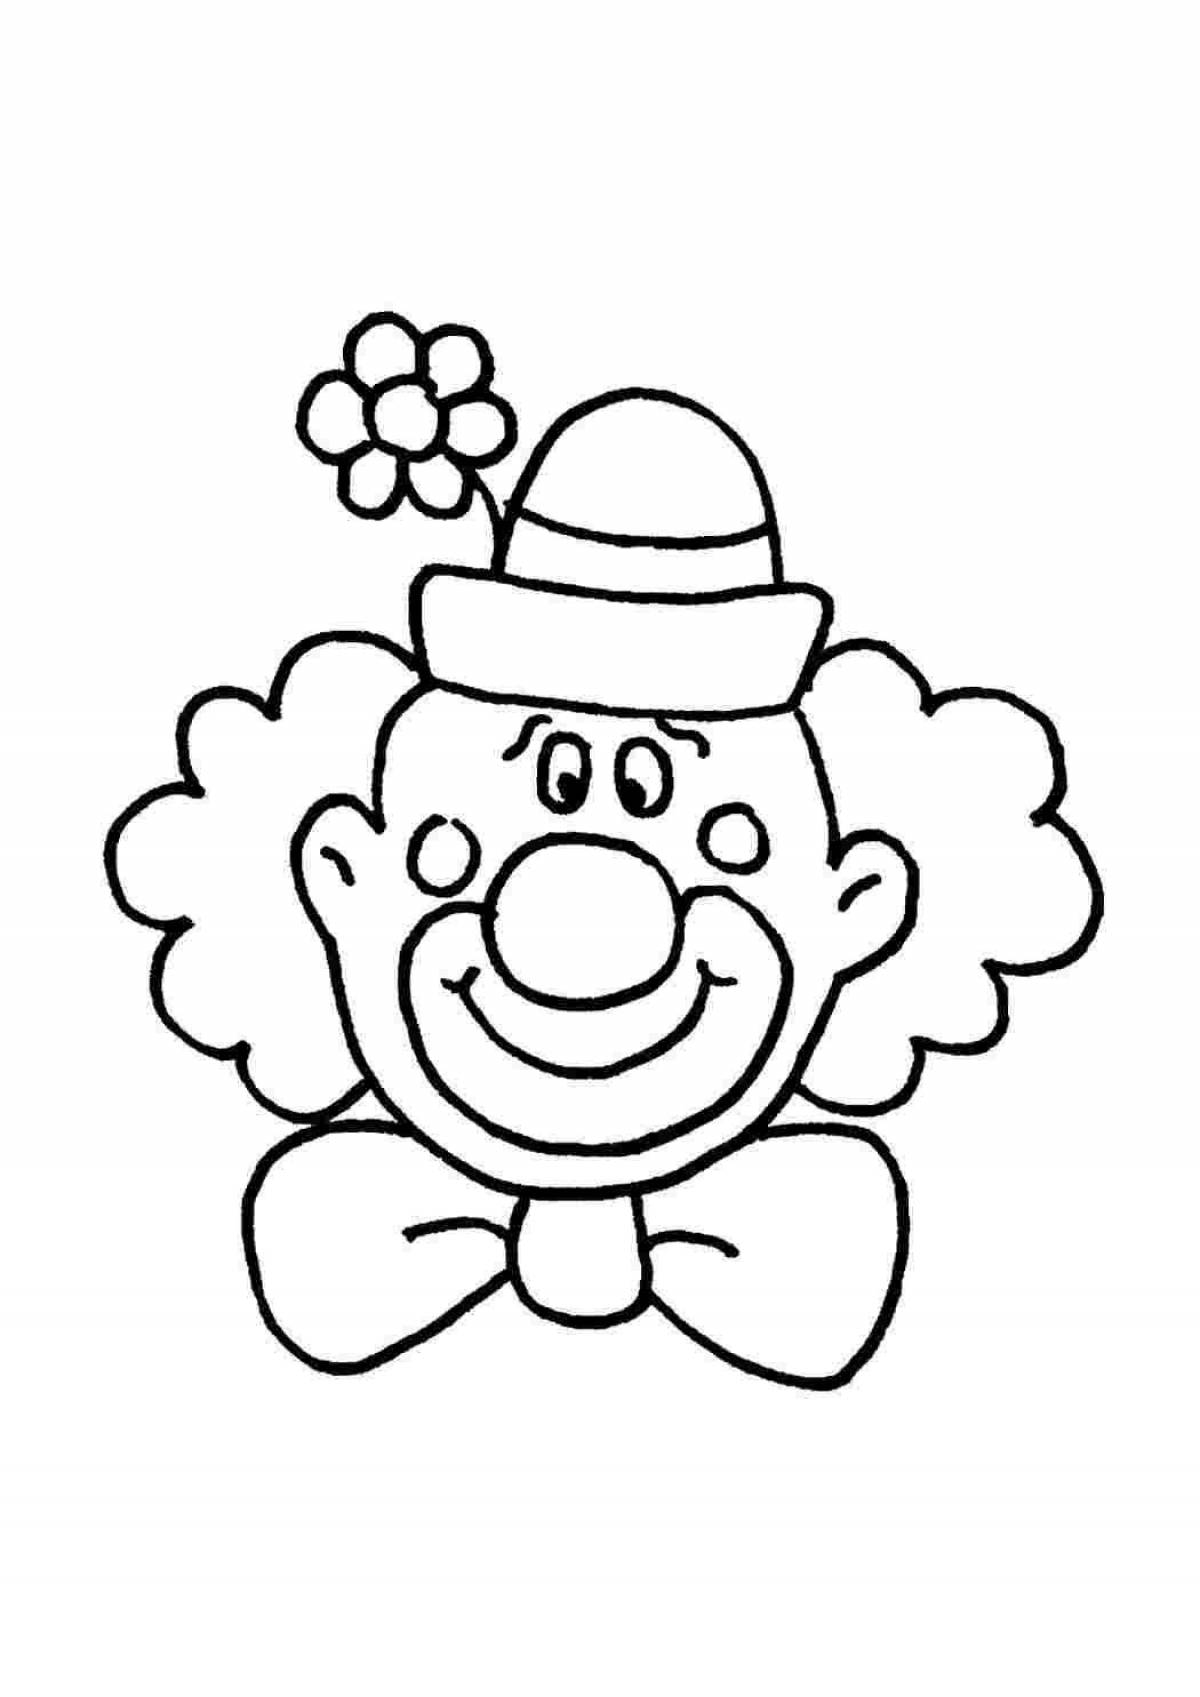 A fun clown coloring book for preschoolers